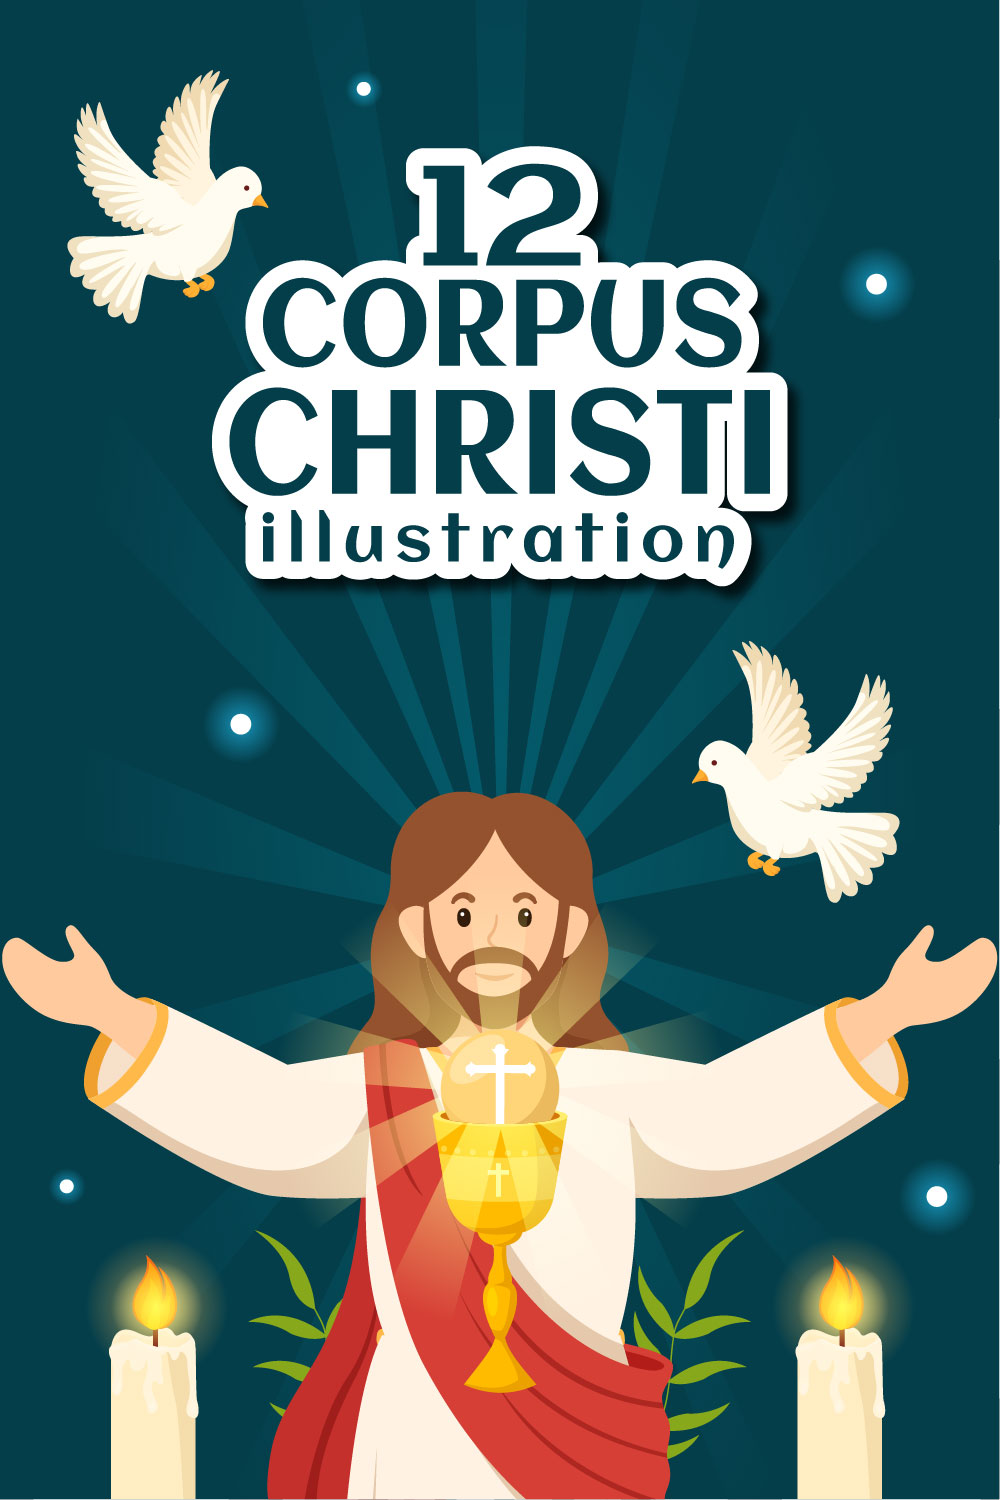 12 Corpus Christi Catholic Religious Illustration pinterest preview image.